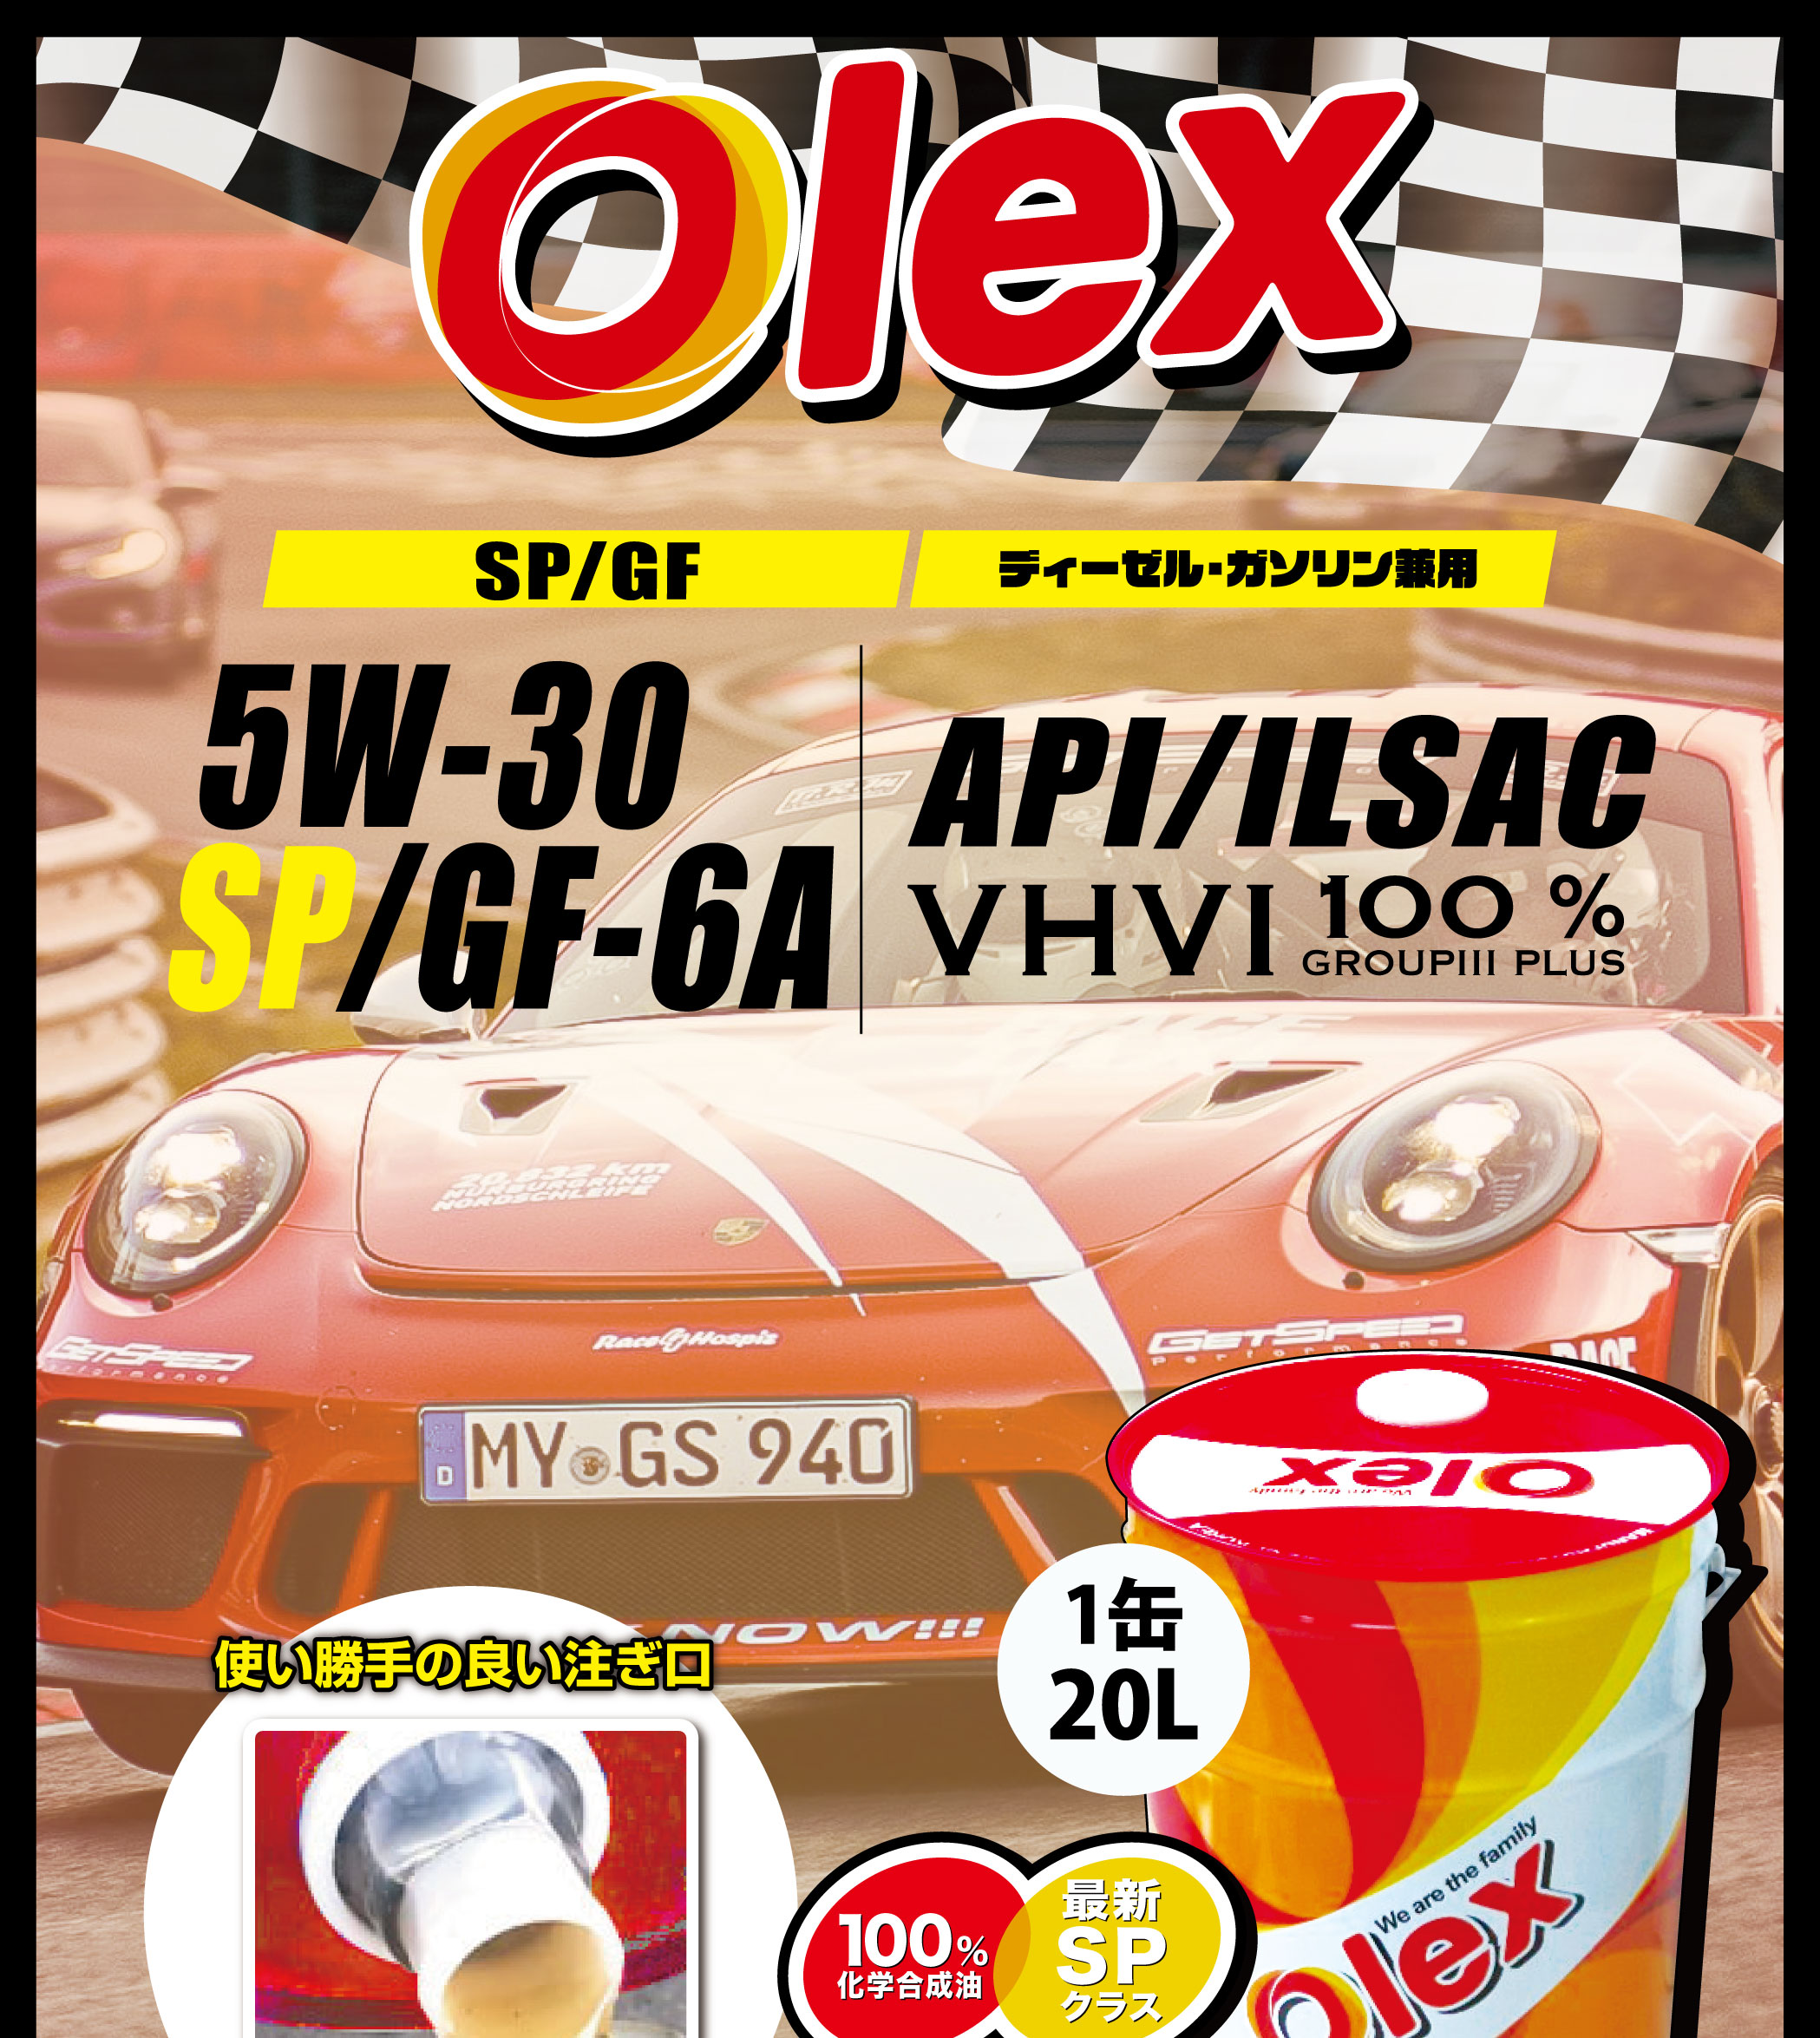 20L) OLEX エンジンオイル 5W-30 SP/GF-6A 141124-0001 ヨロスト 店 通販  